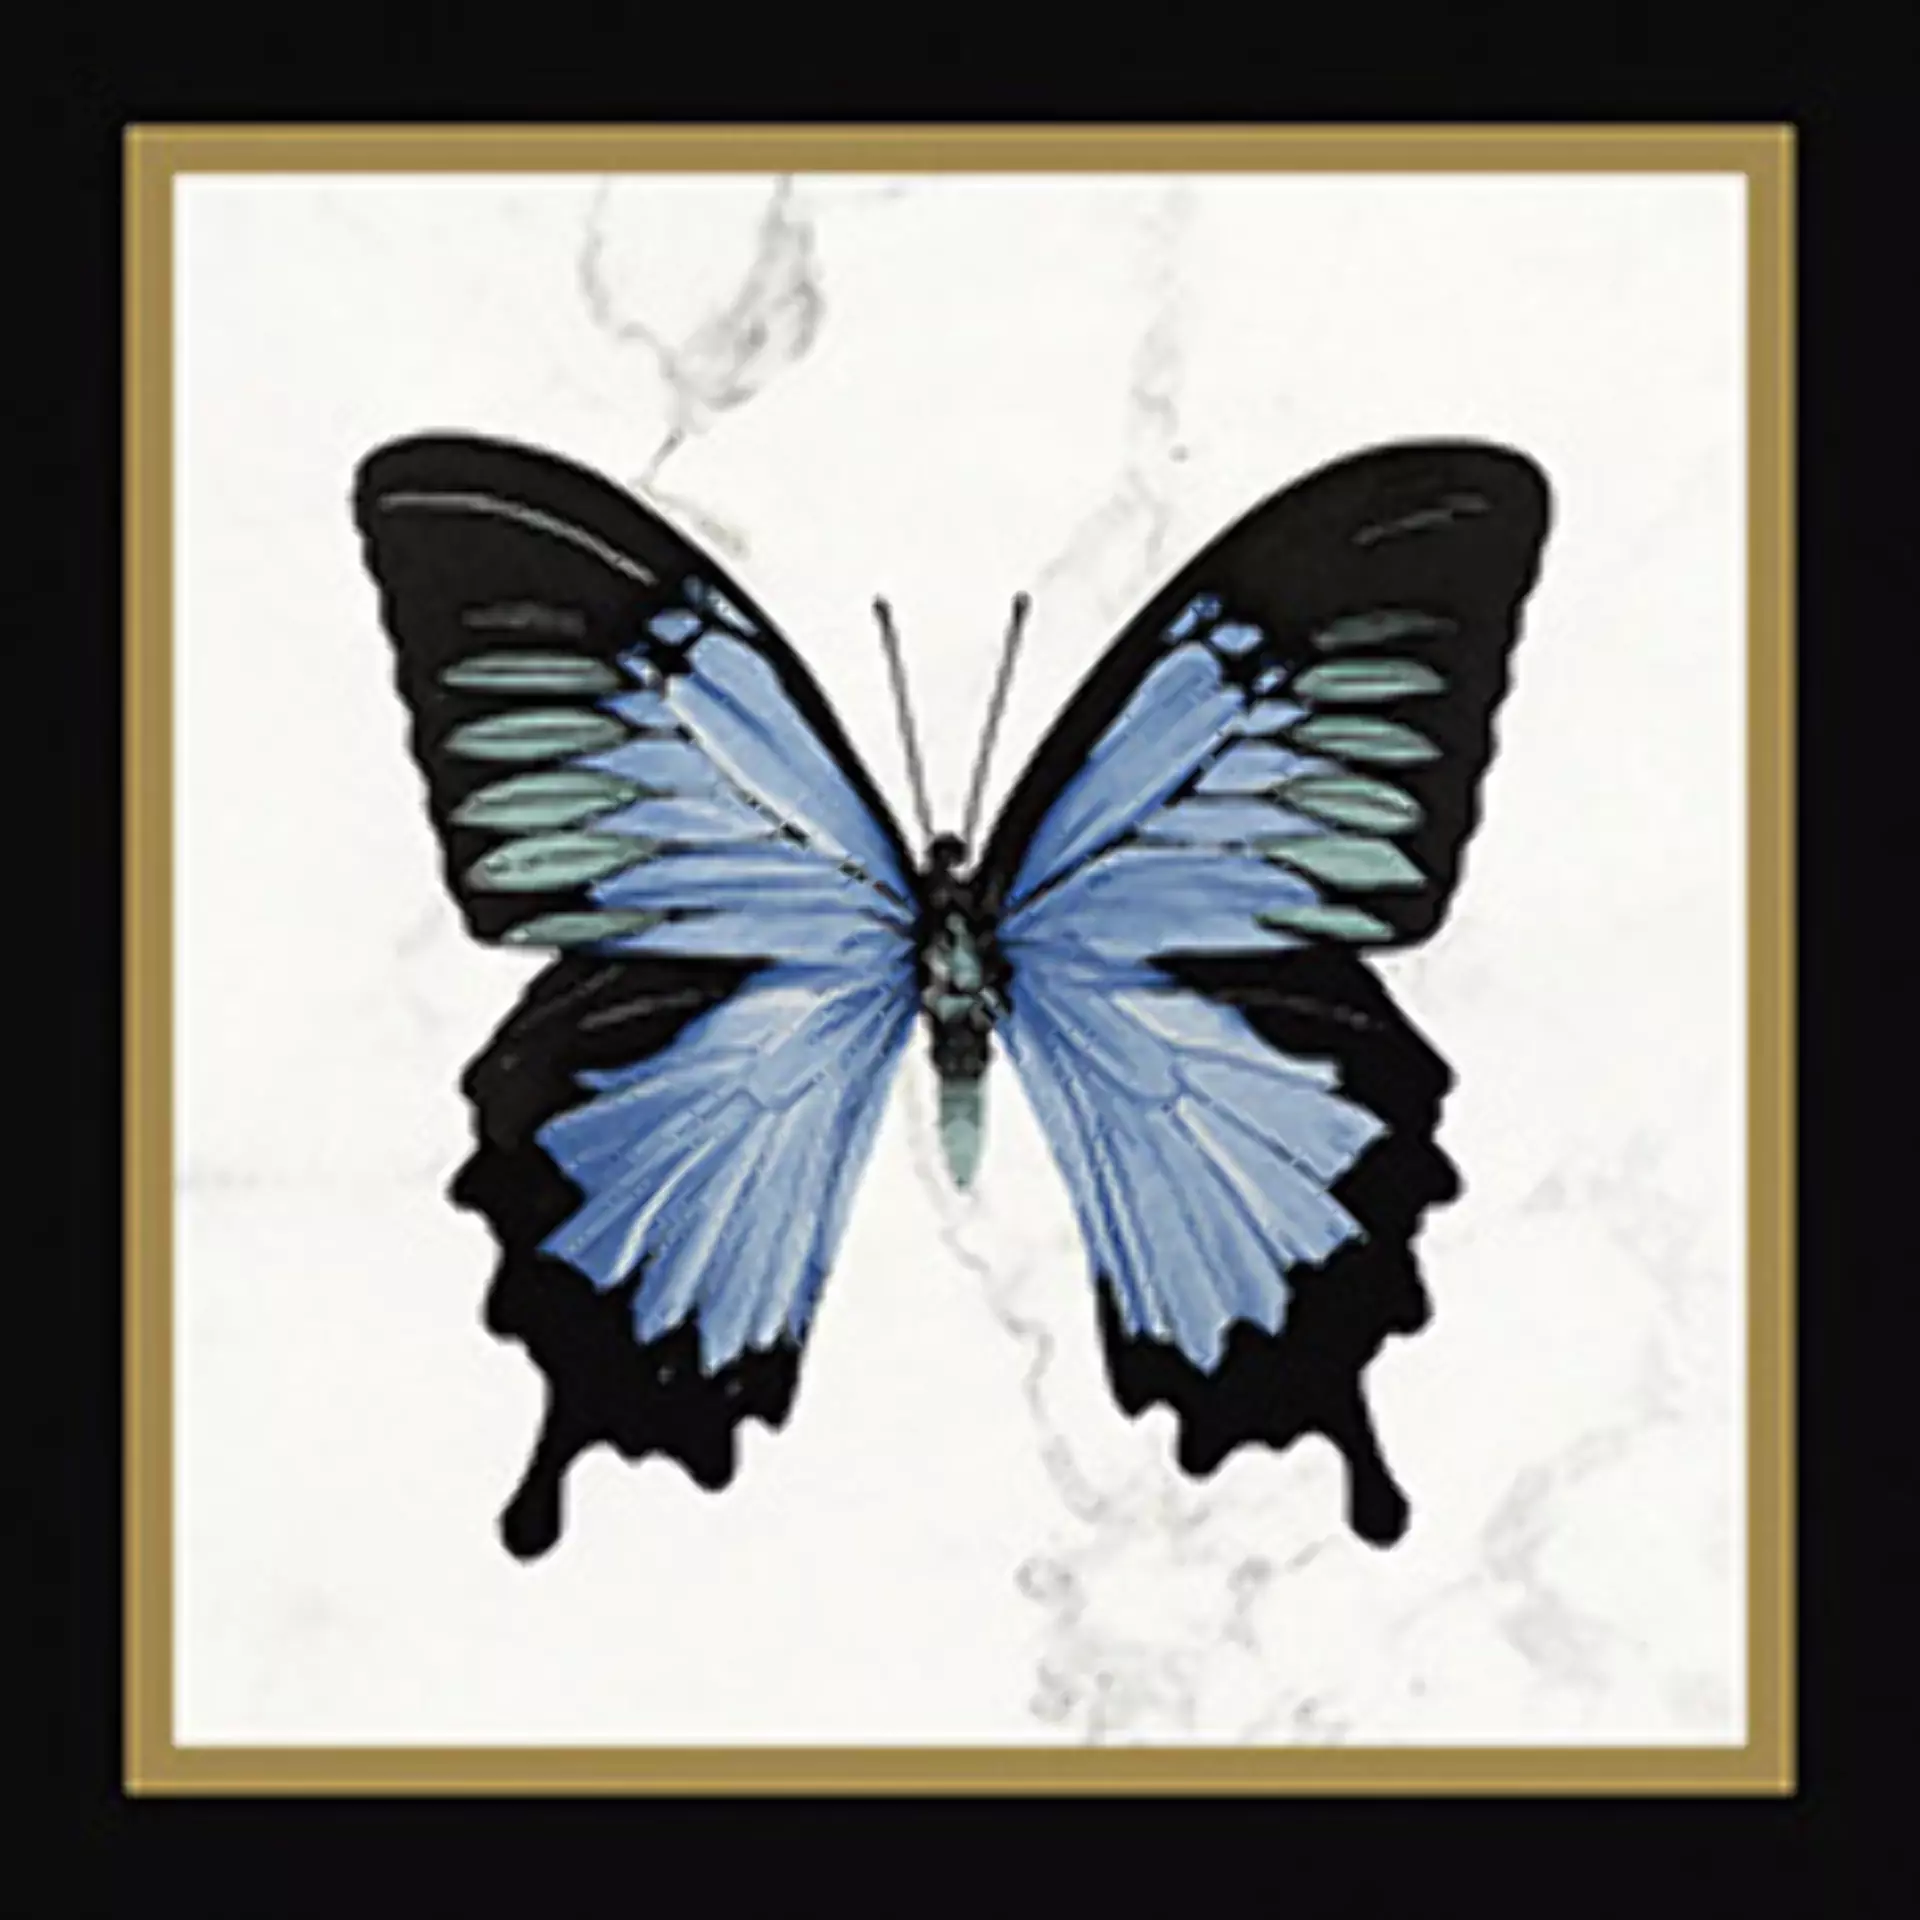 Villeroy & Boch Victorian Black - White Glossy Decor Butterfly 1222-MK0C 20x20cm rectified 10mm